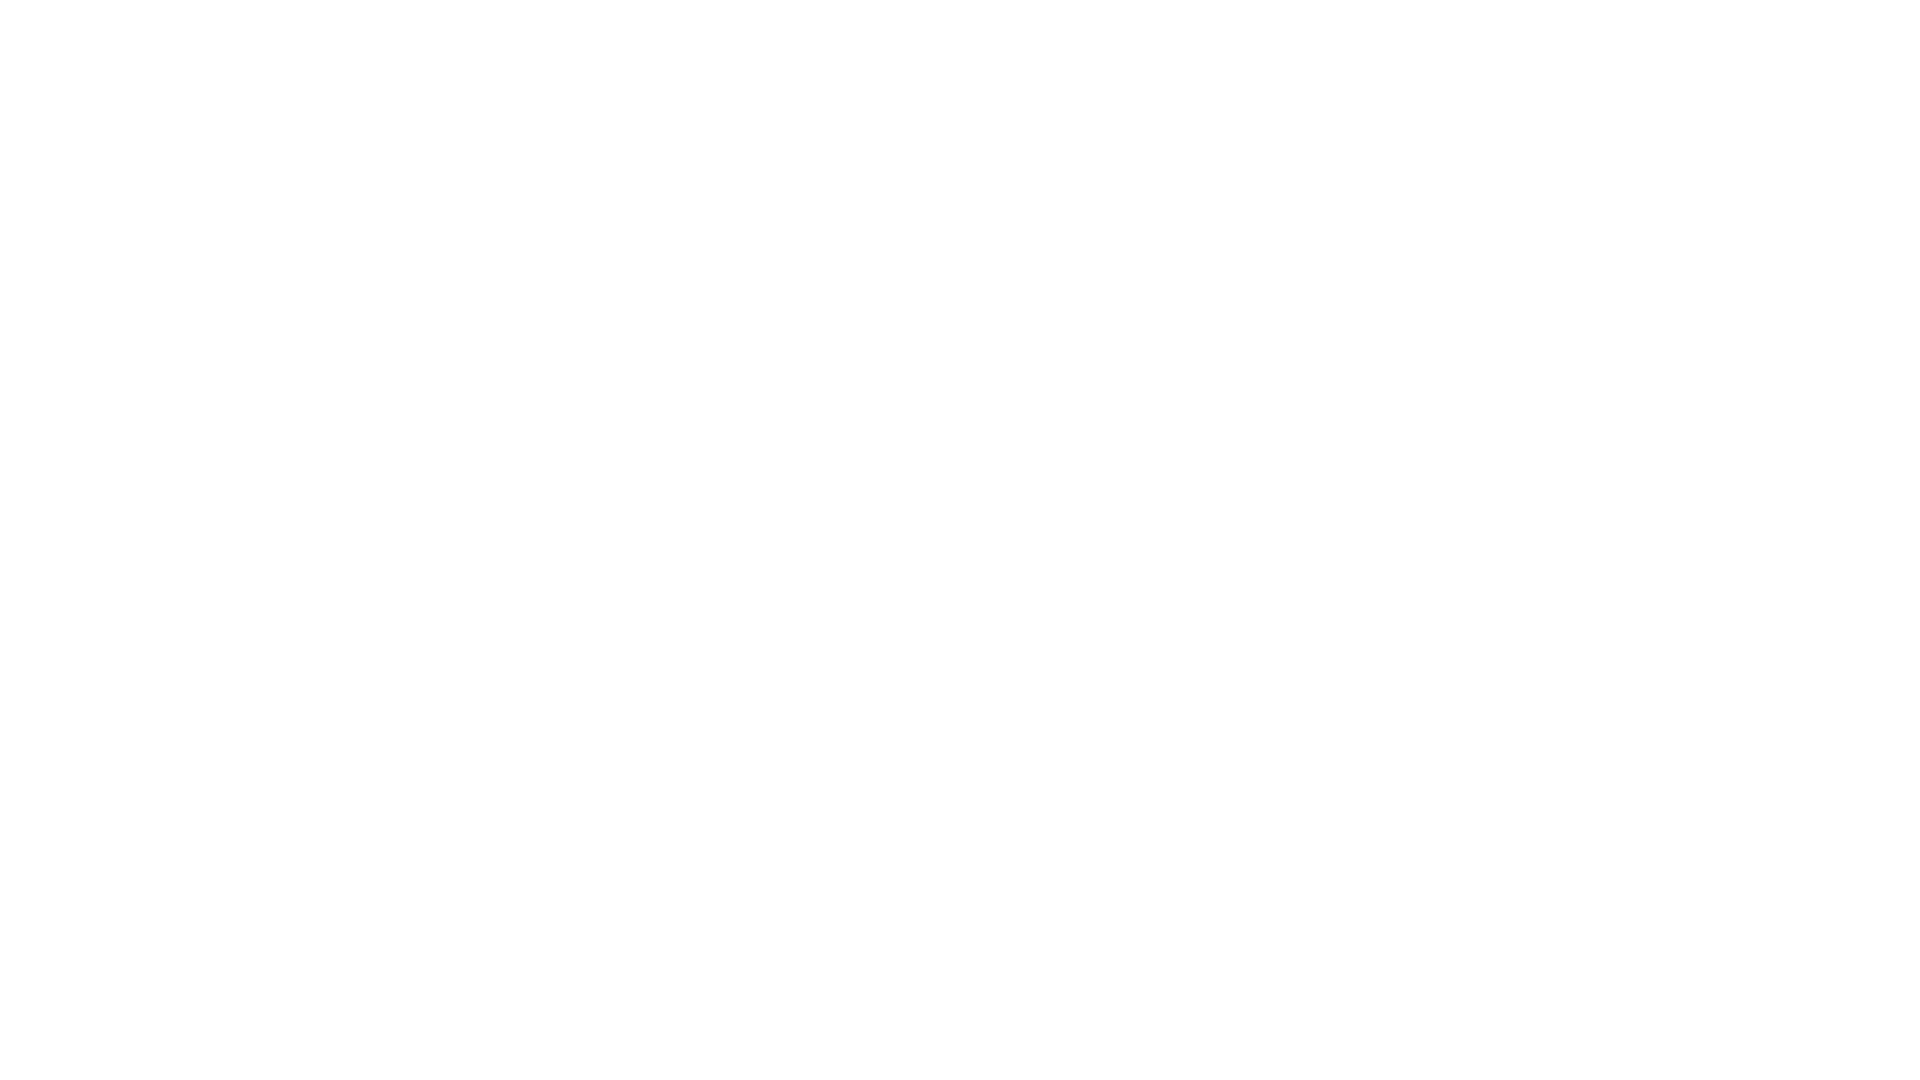 VRLab Academy